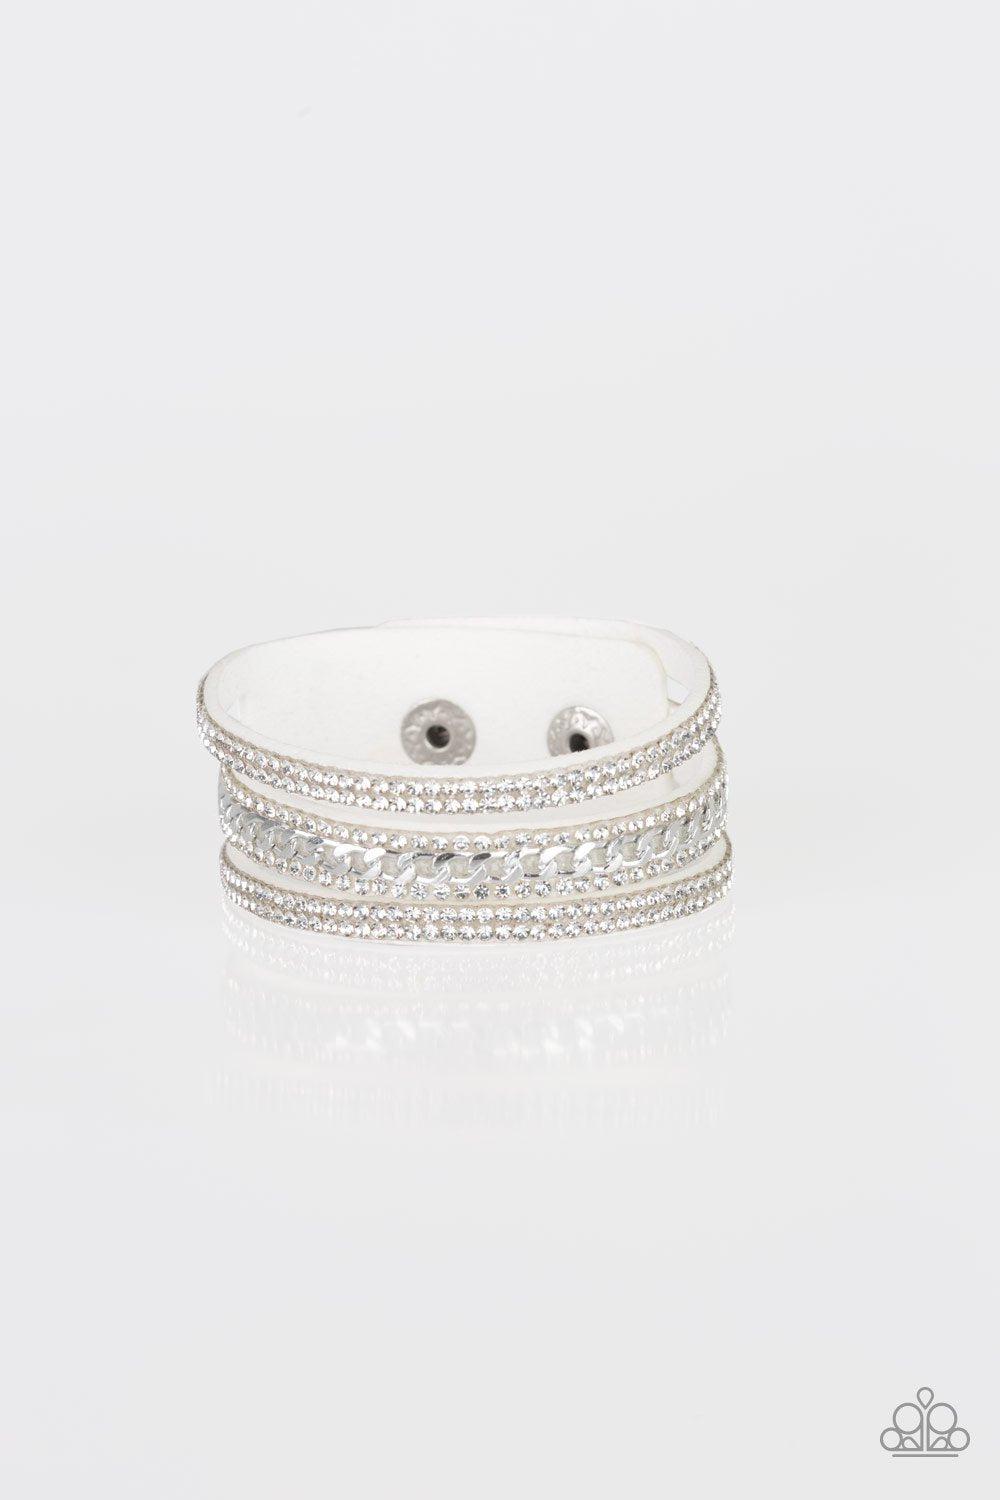 Rollin' In Rhinestones White Urban Wrap Snap Bracelet - Paparazzi Accessories-CarasShop.com - $5 Jewelry by Cara Jewels